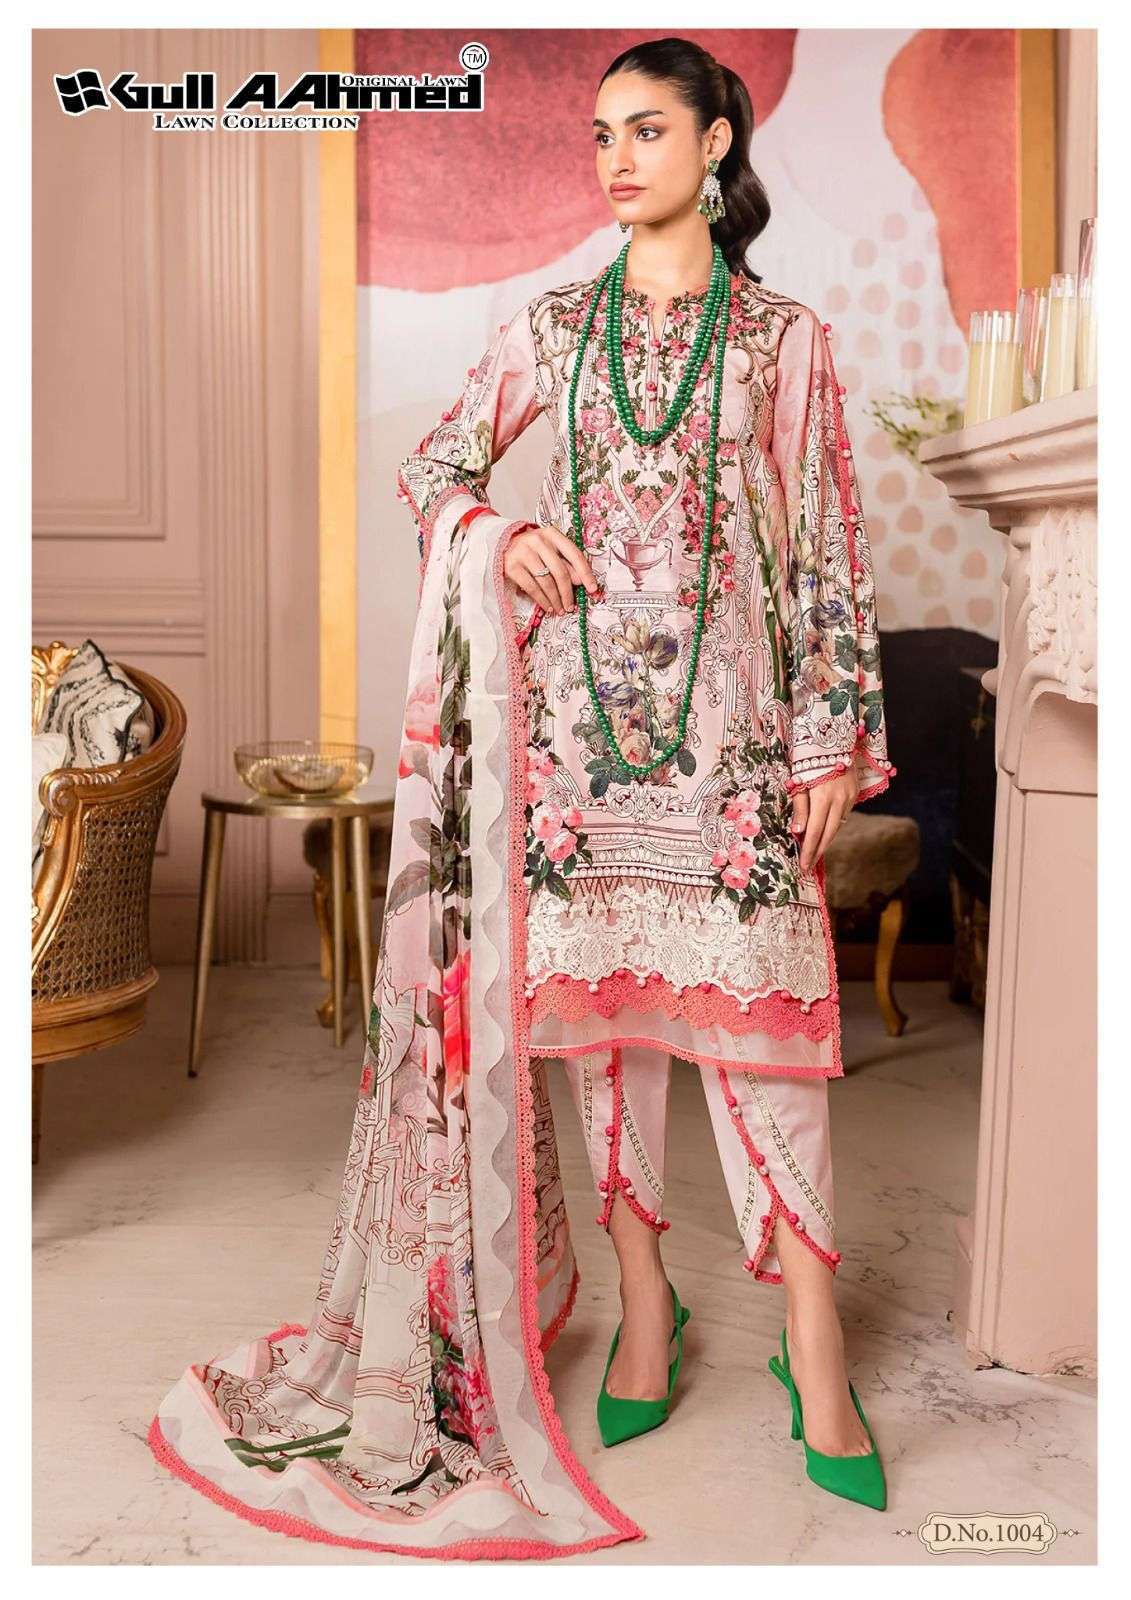 Gulla ahmed Azure Lawn Cotton with fancy Pakistani salwar ka...